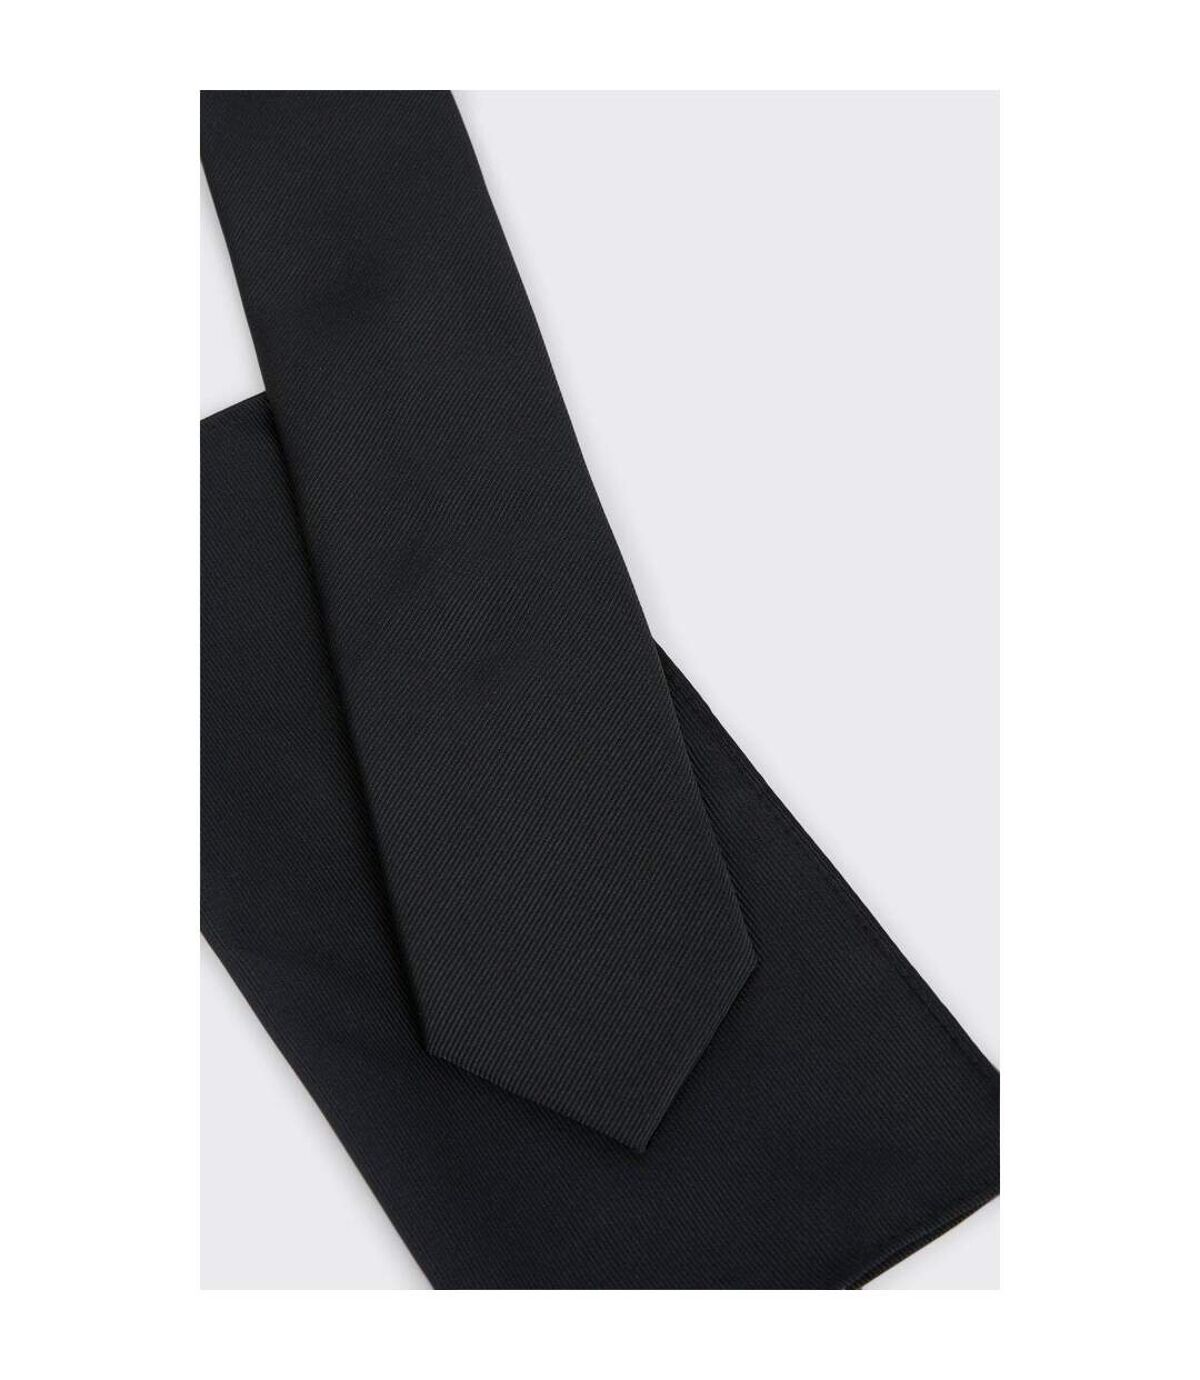 Burton Mens Slim Tie & Pocket Square Set (Black) (One Size)